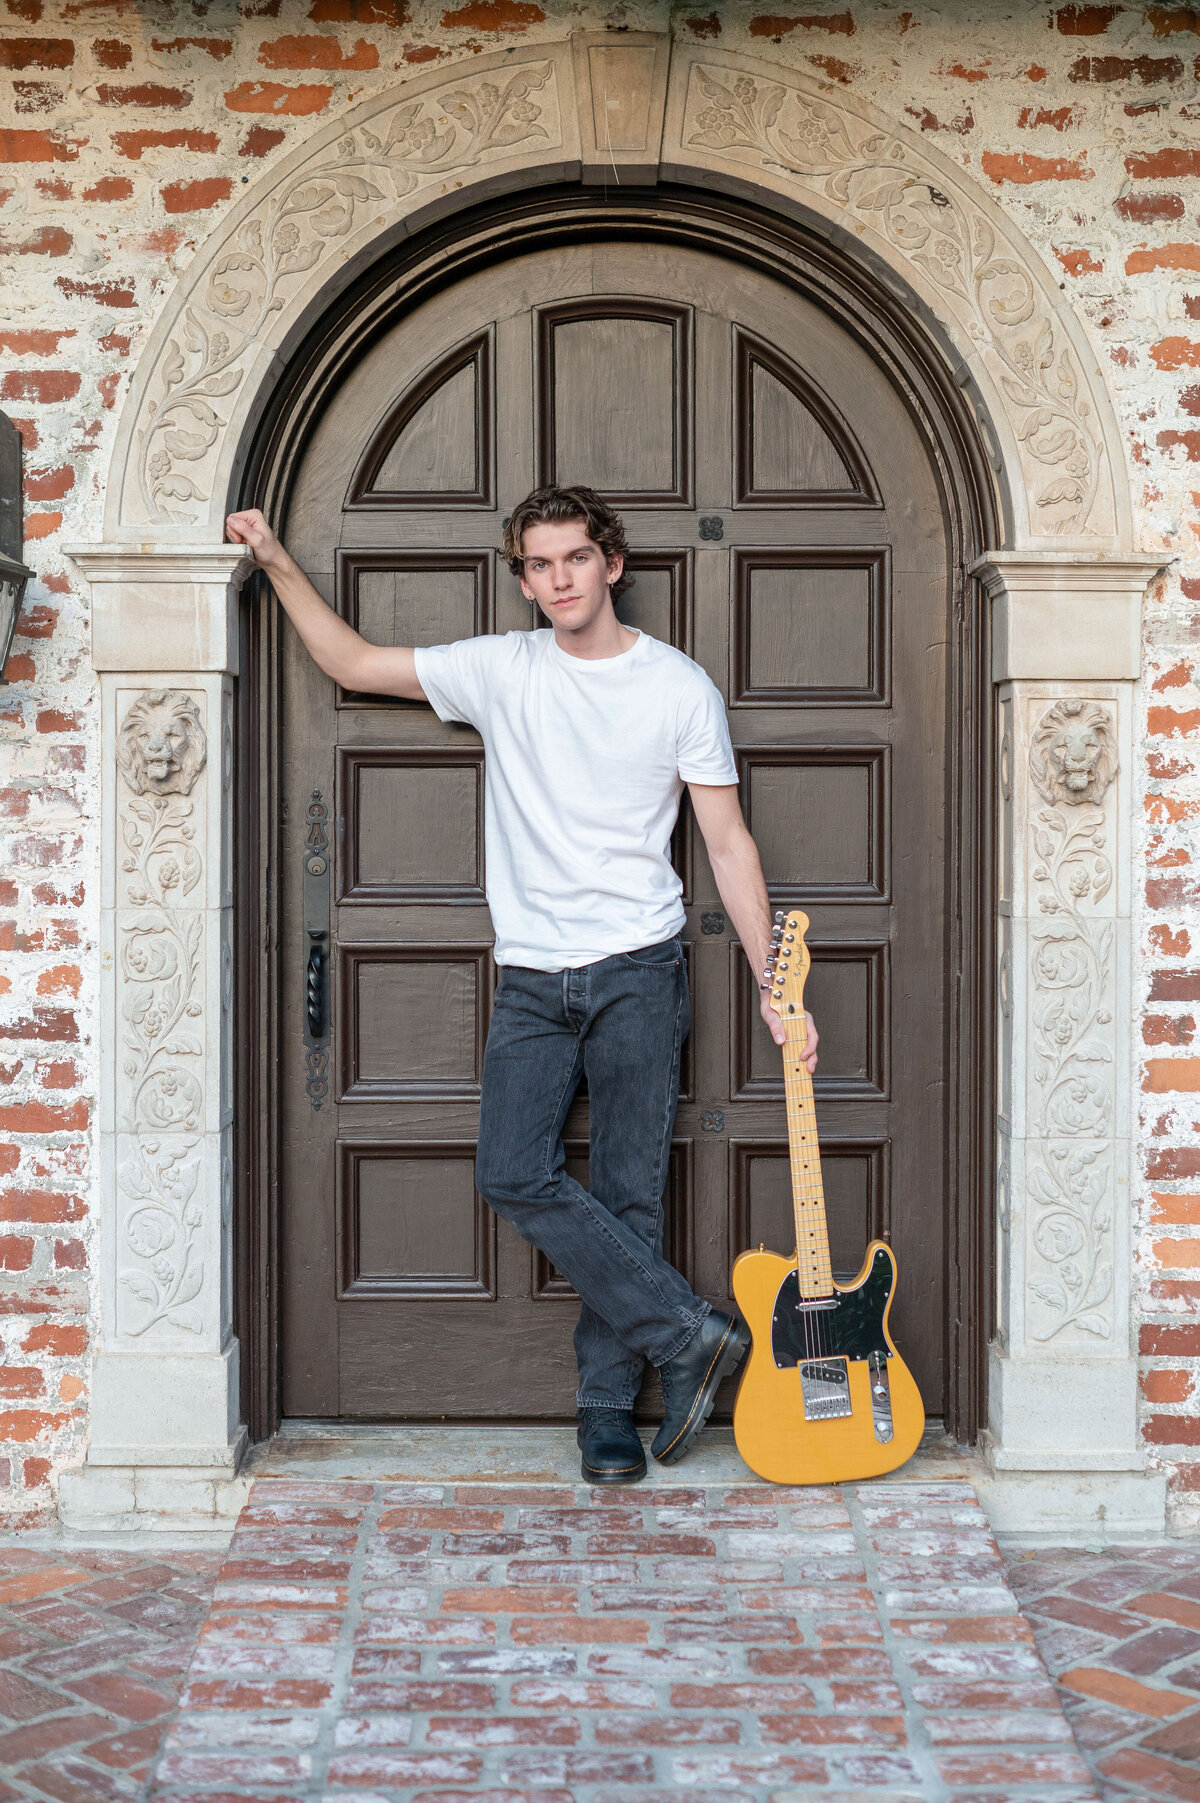 High school senior boy leans in doorway with guitar.